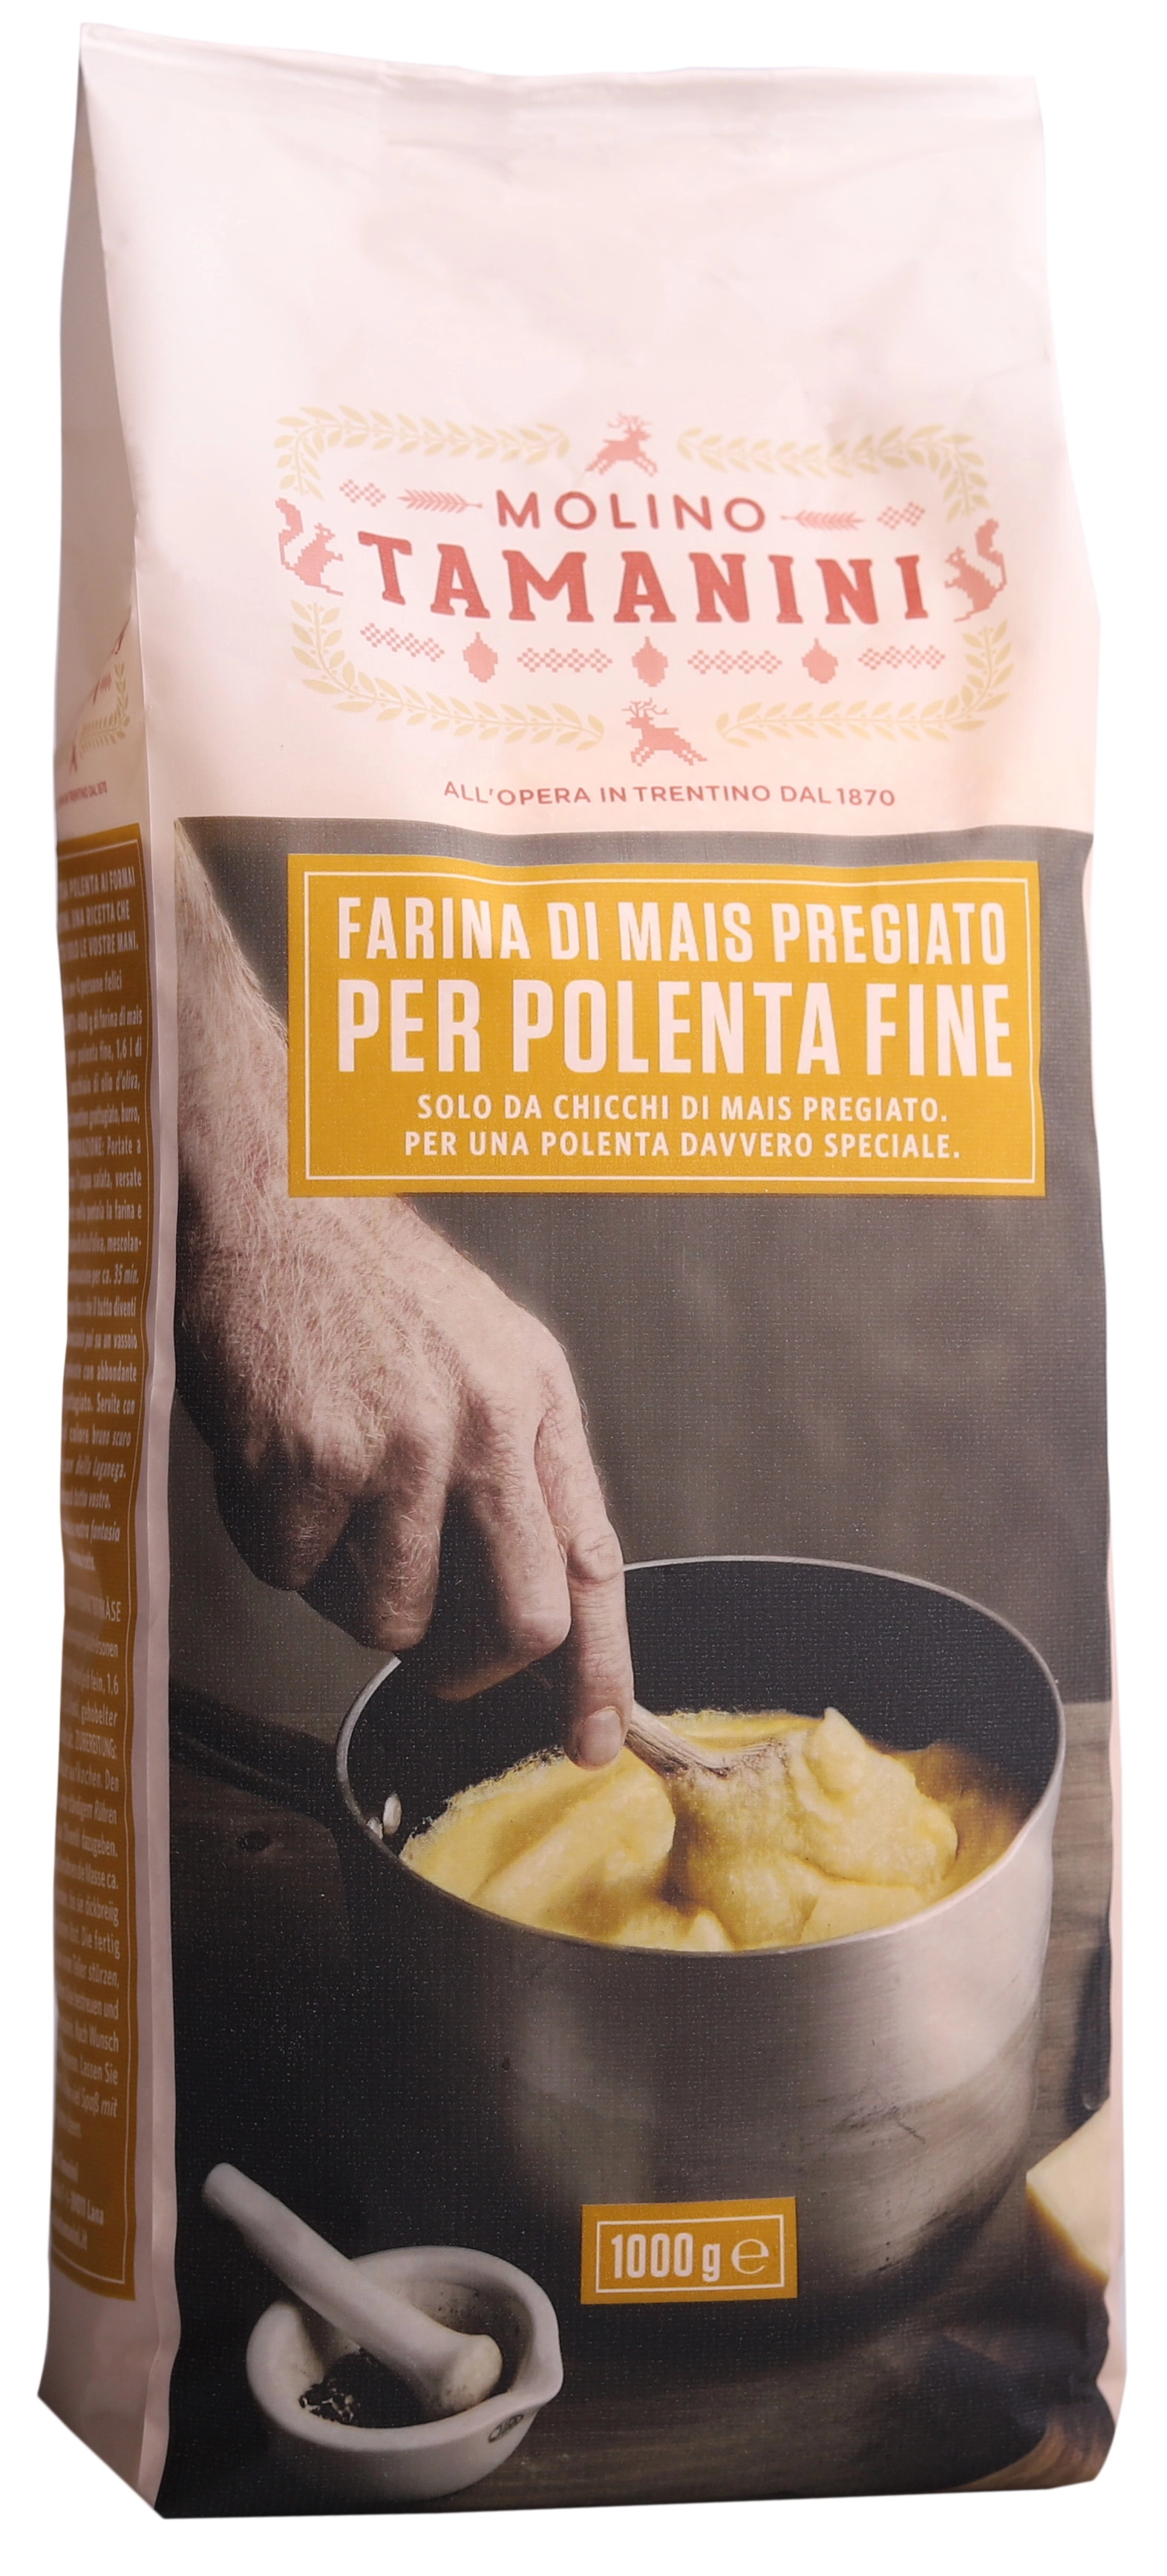 Fine cornmeal for polenta